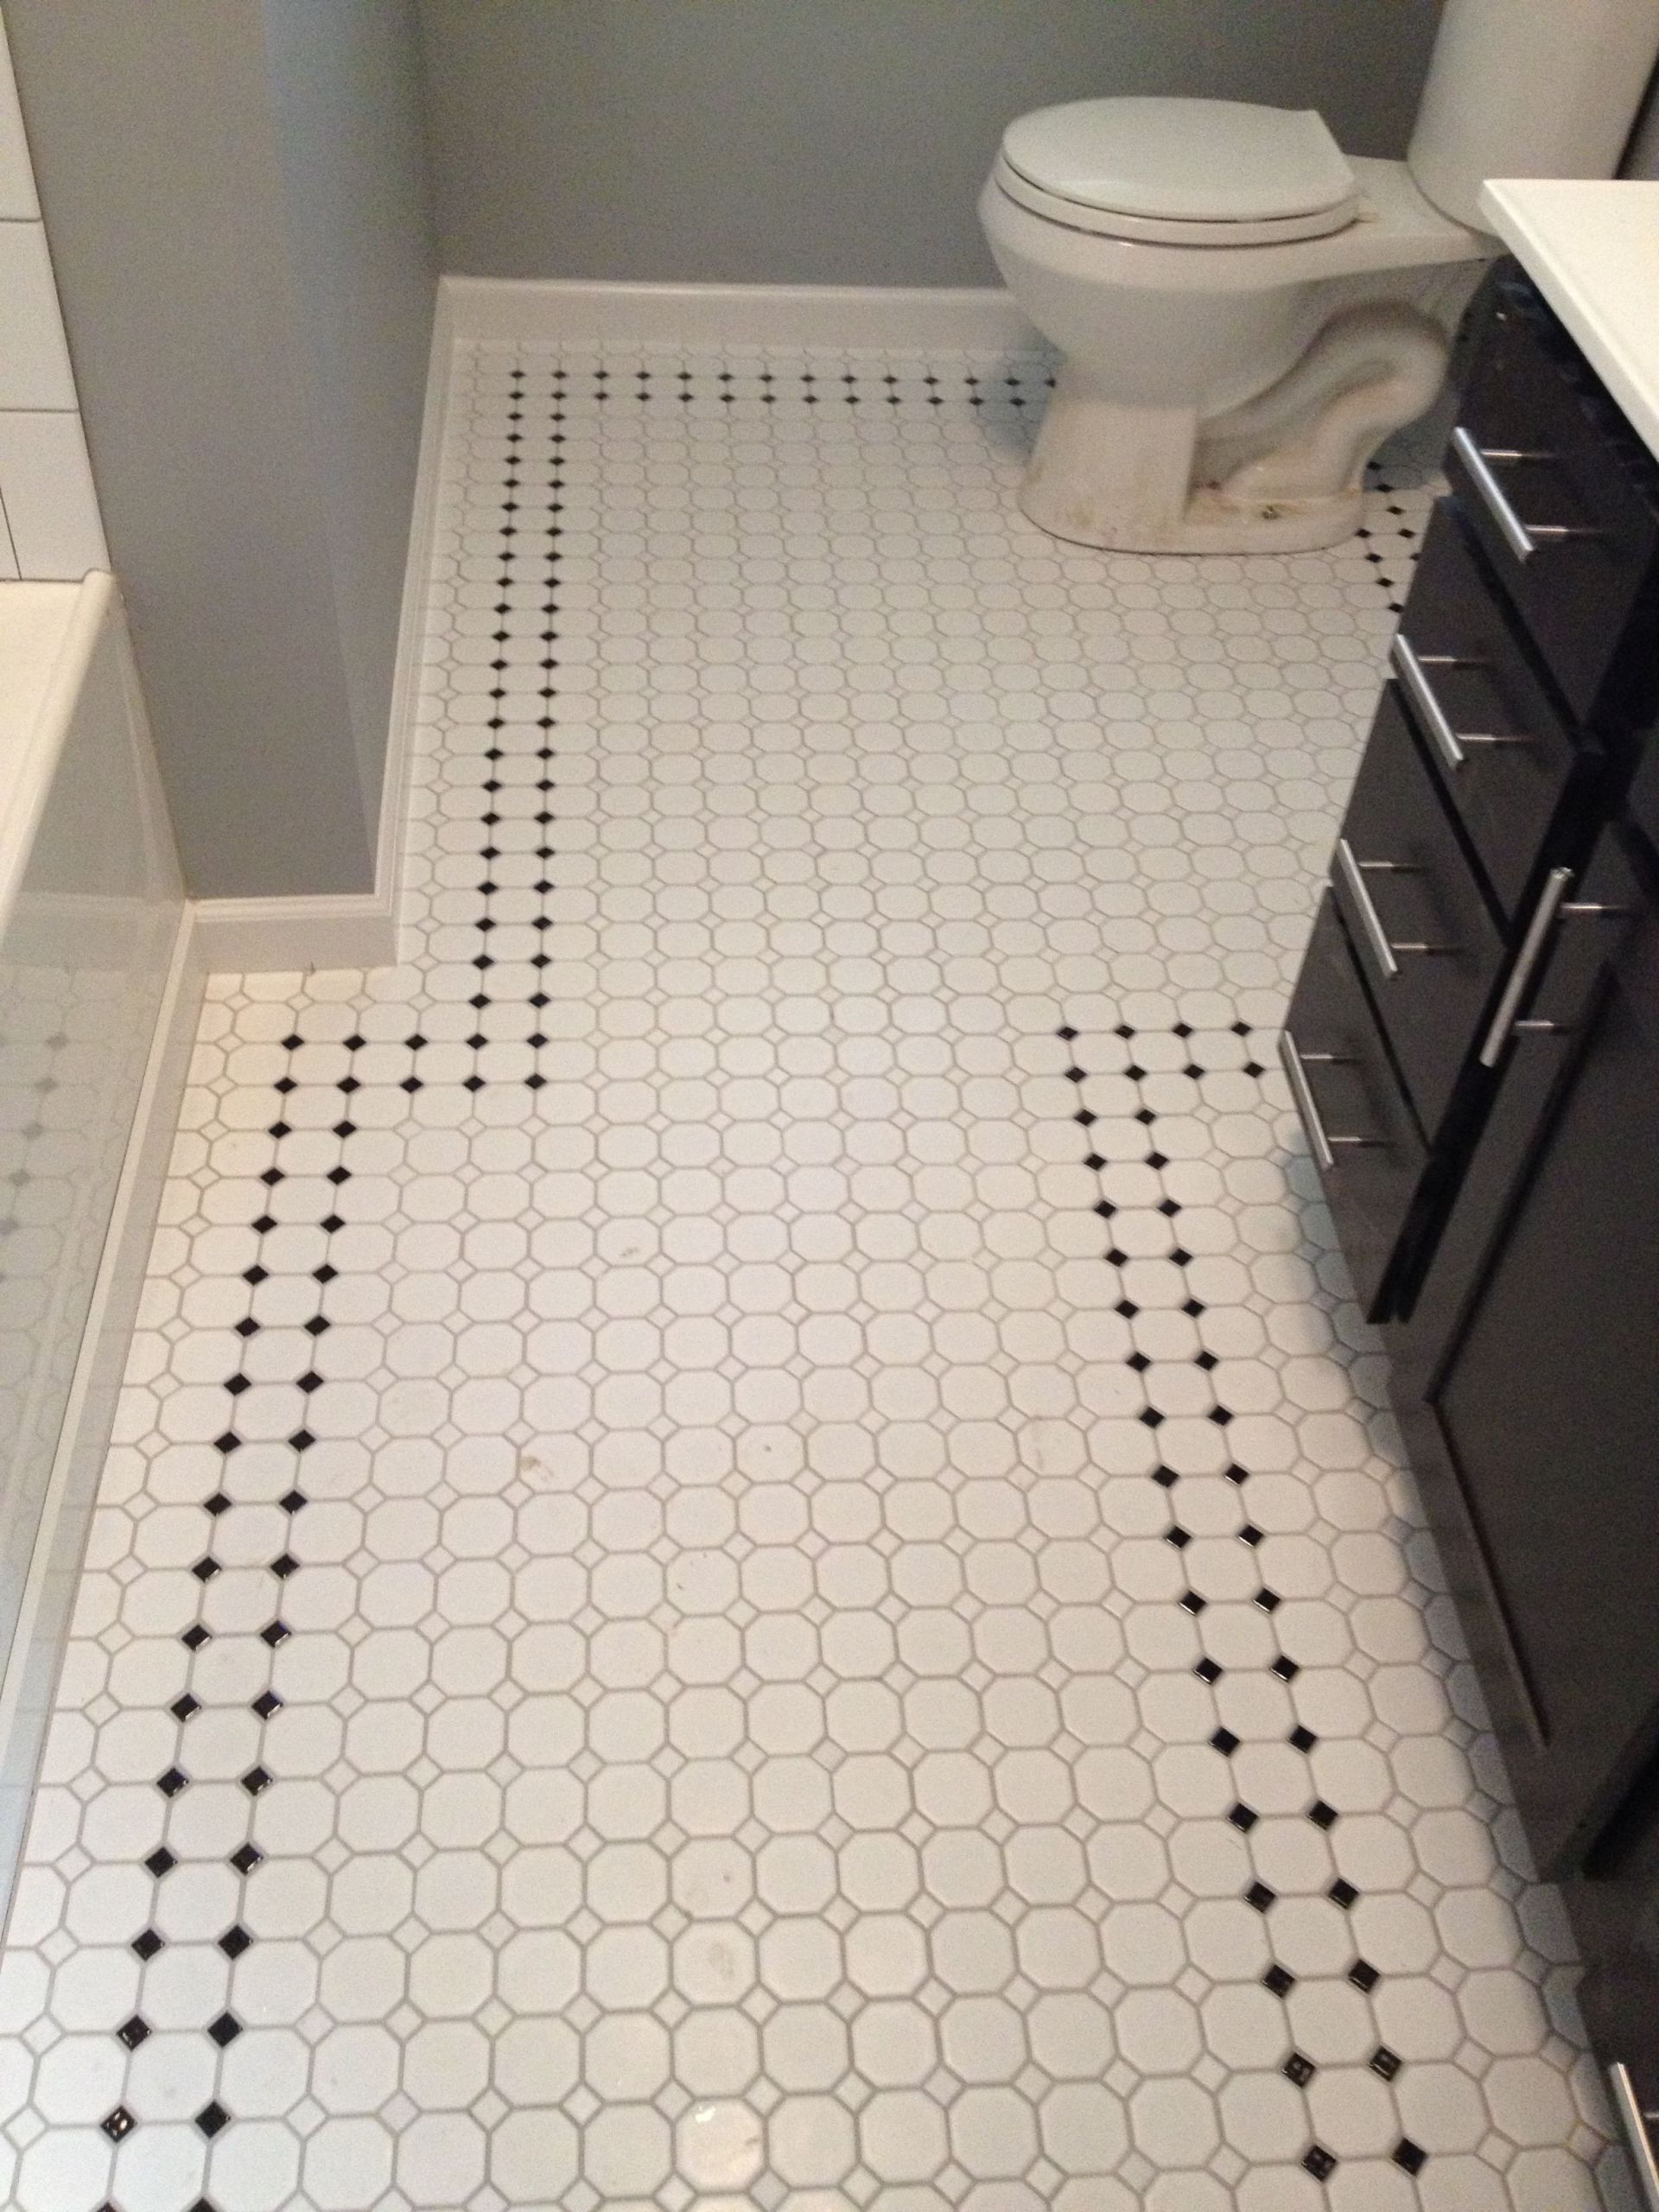 Octagon Bathroom Tile
 Retro inspired octagon and dot bathroom floor tile